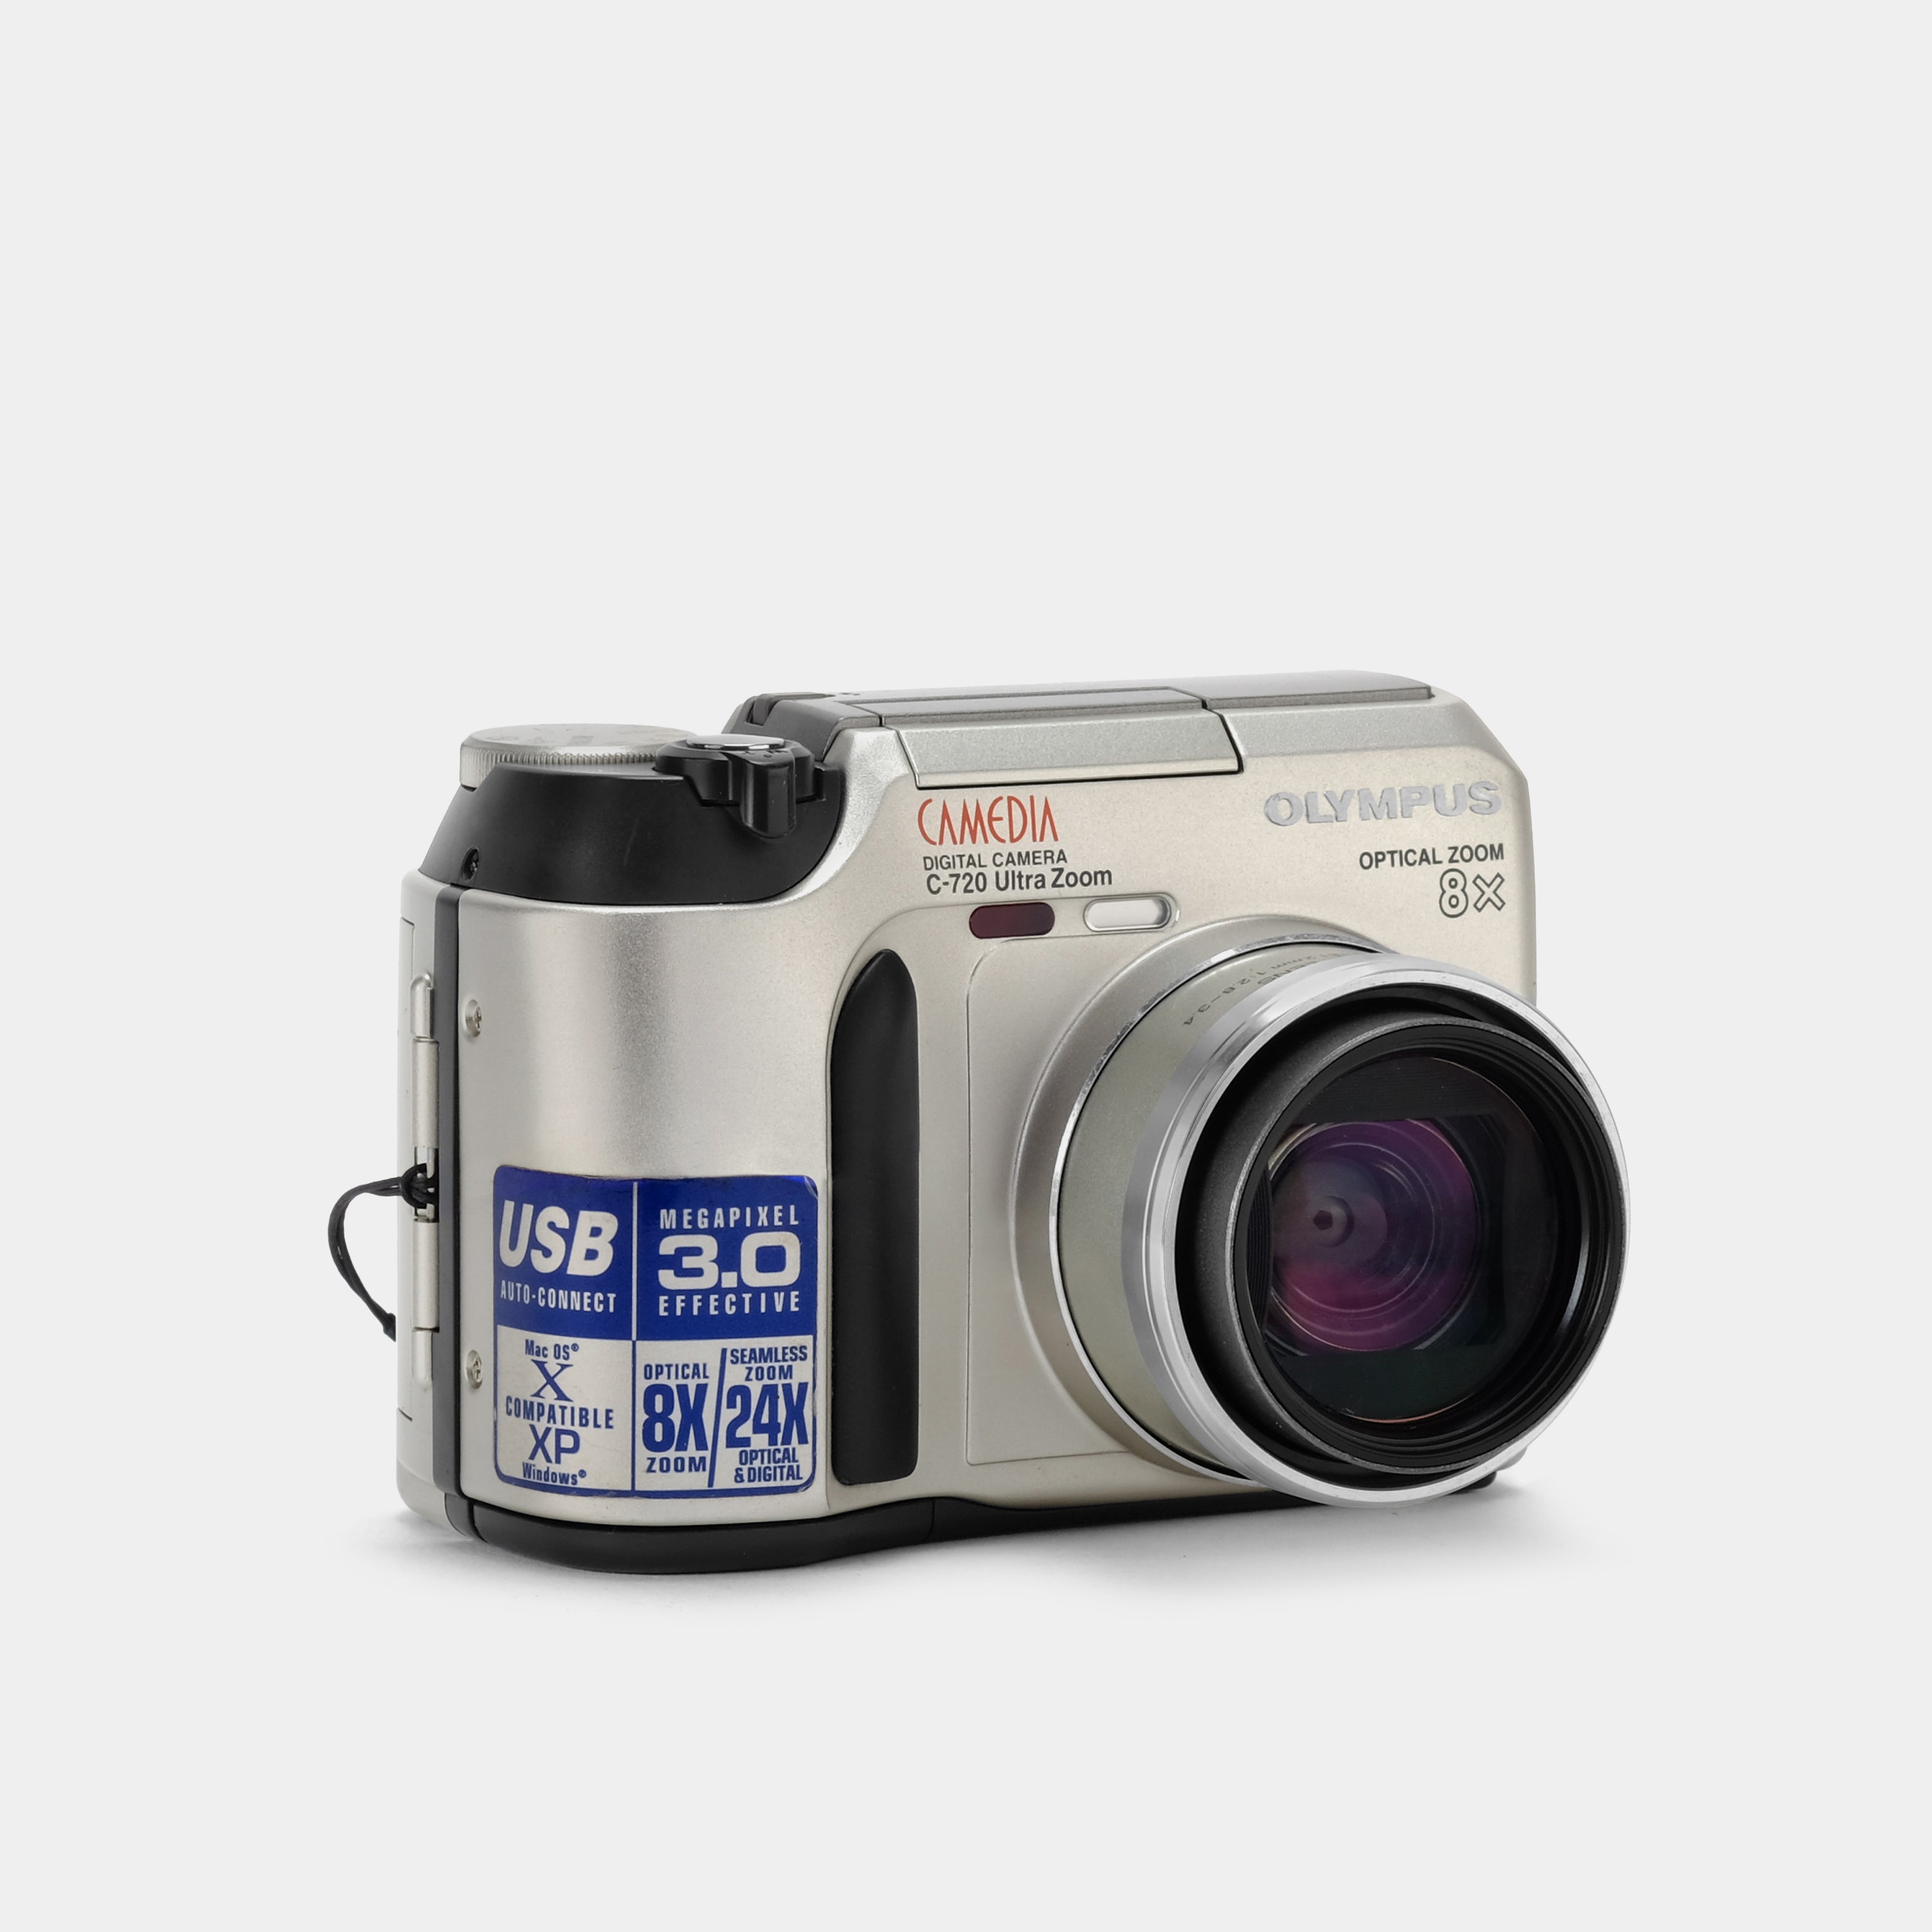 Olympus Camedia C-720 Ultra Zoom Point and Shoot Digital Camera